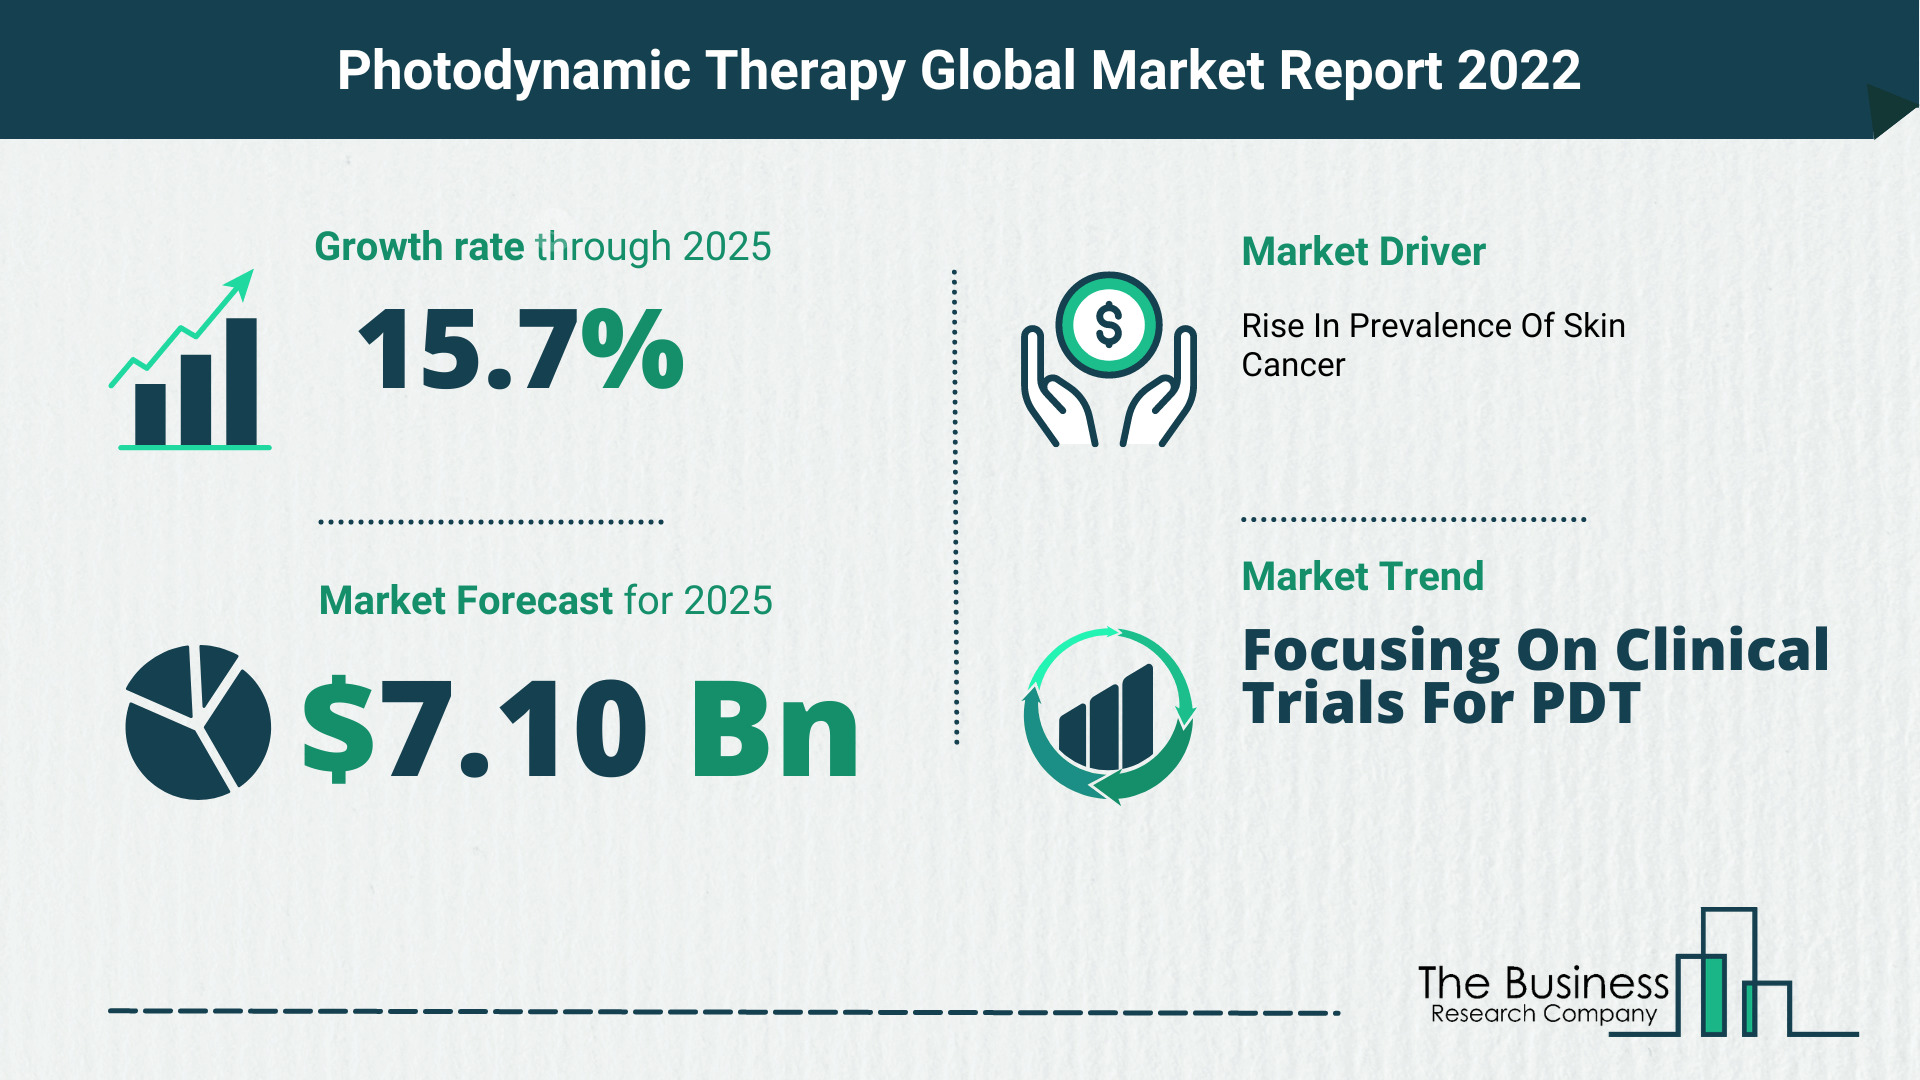 Global Photodynamic Therapy Market